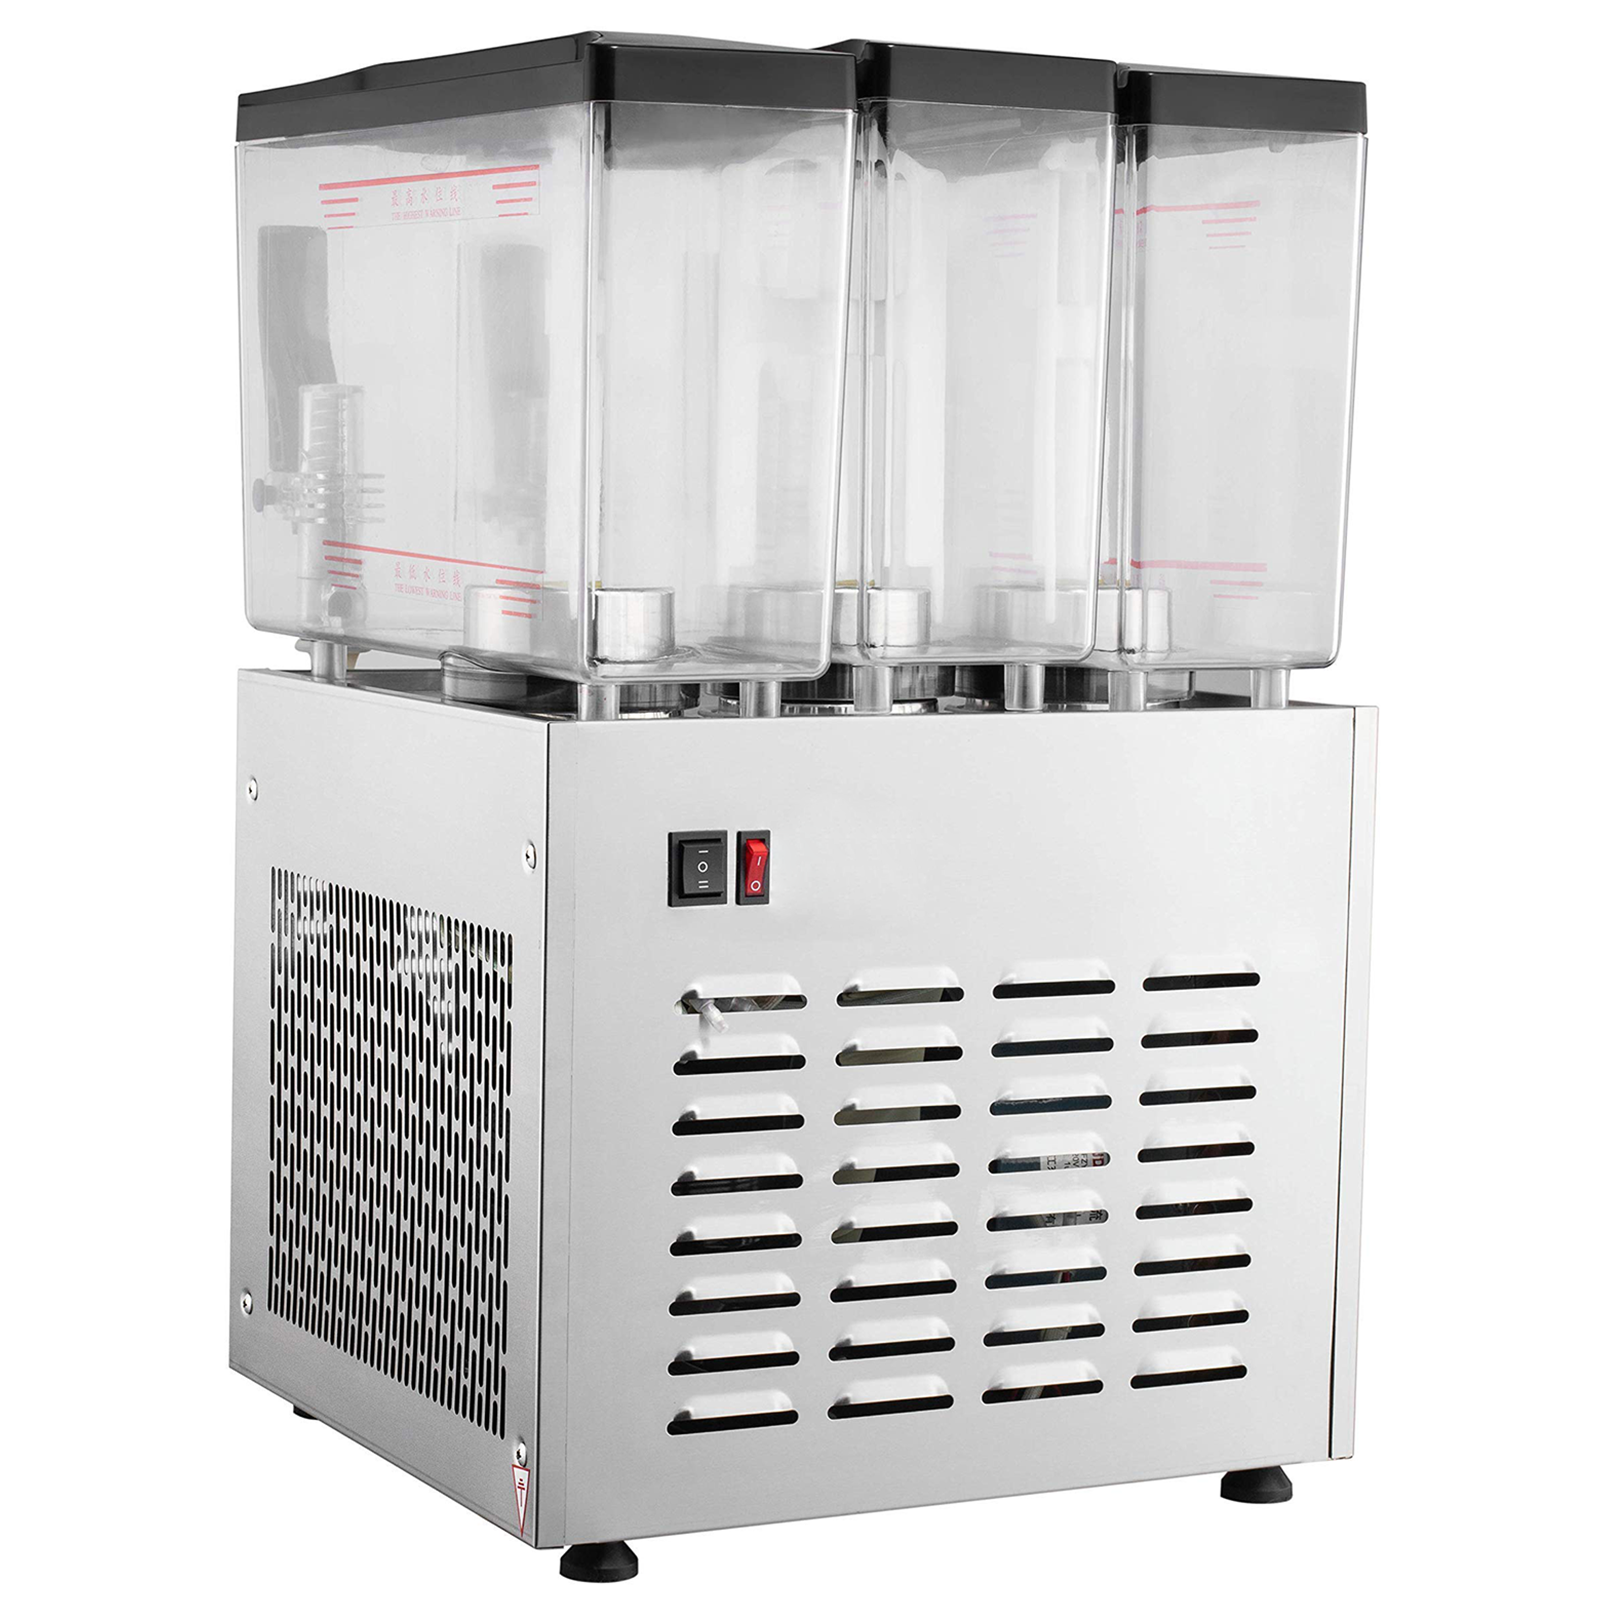 TFCFL 6L Insulated Beverage Dispenser Thermal Hot Cold Drink